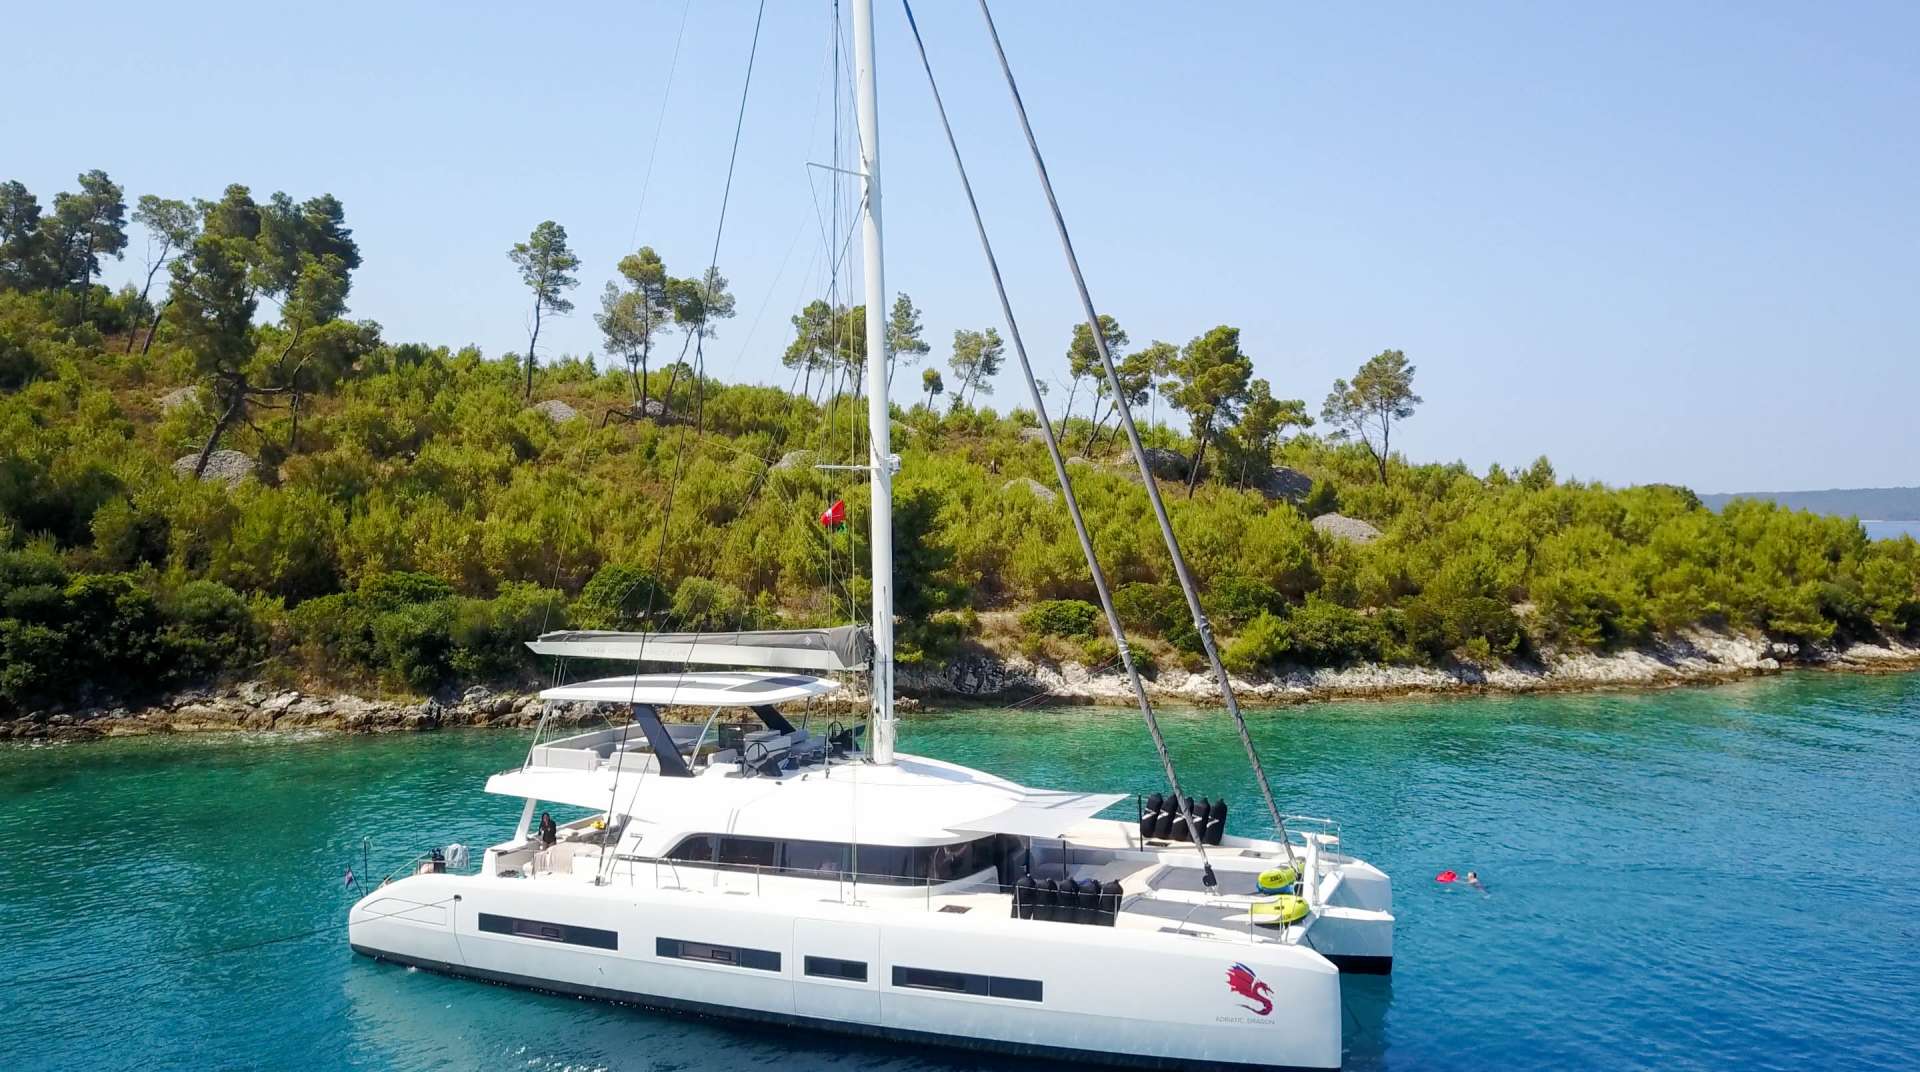 adriatic dragon (lagoon 77) - Yacht Charter Milna & Boat hire in Croatia 1